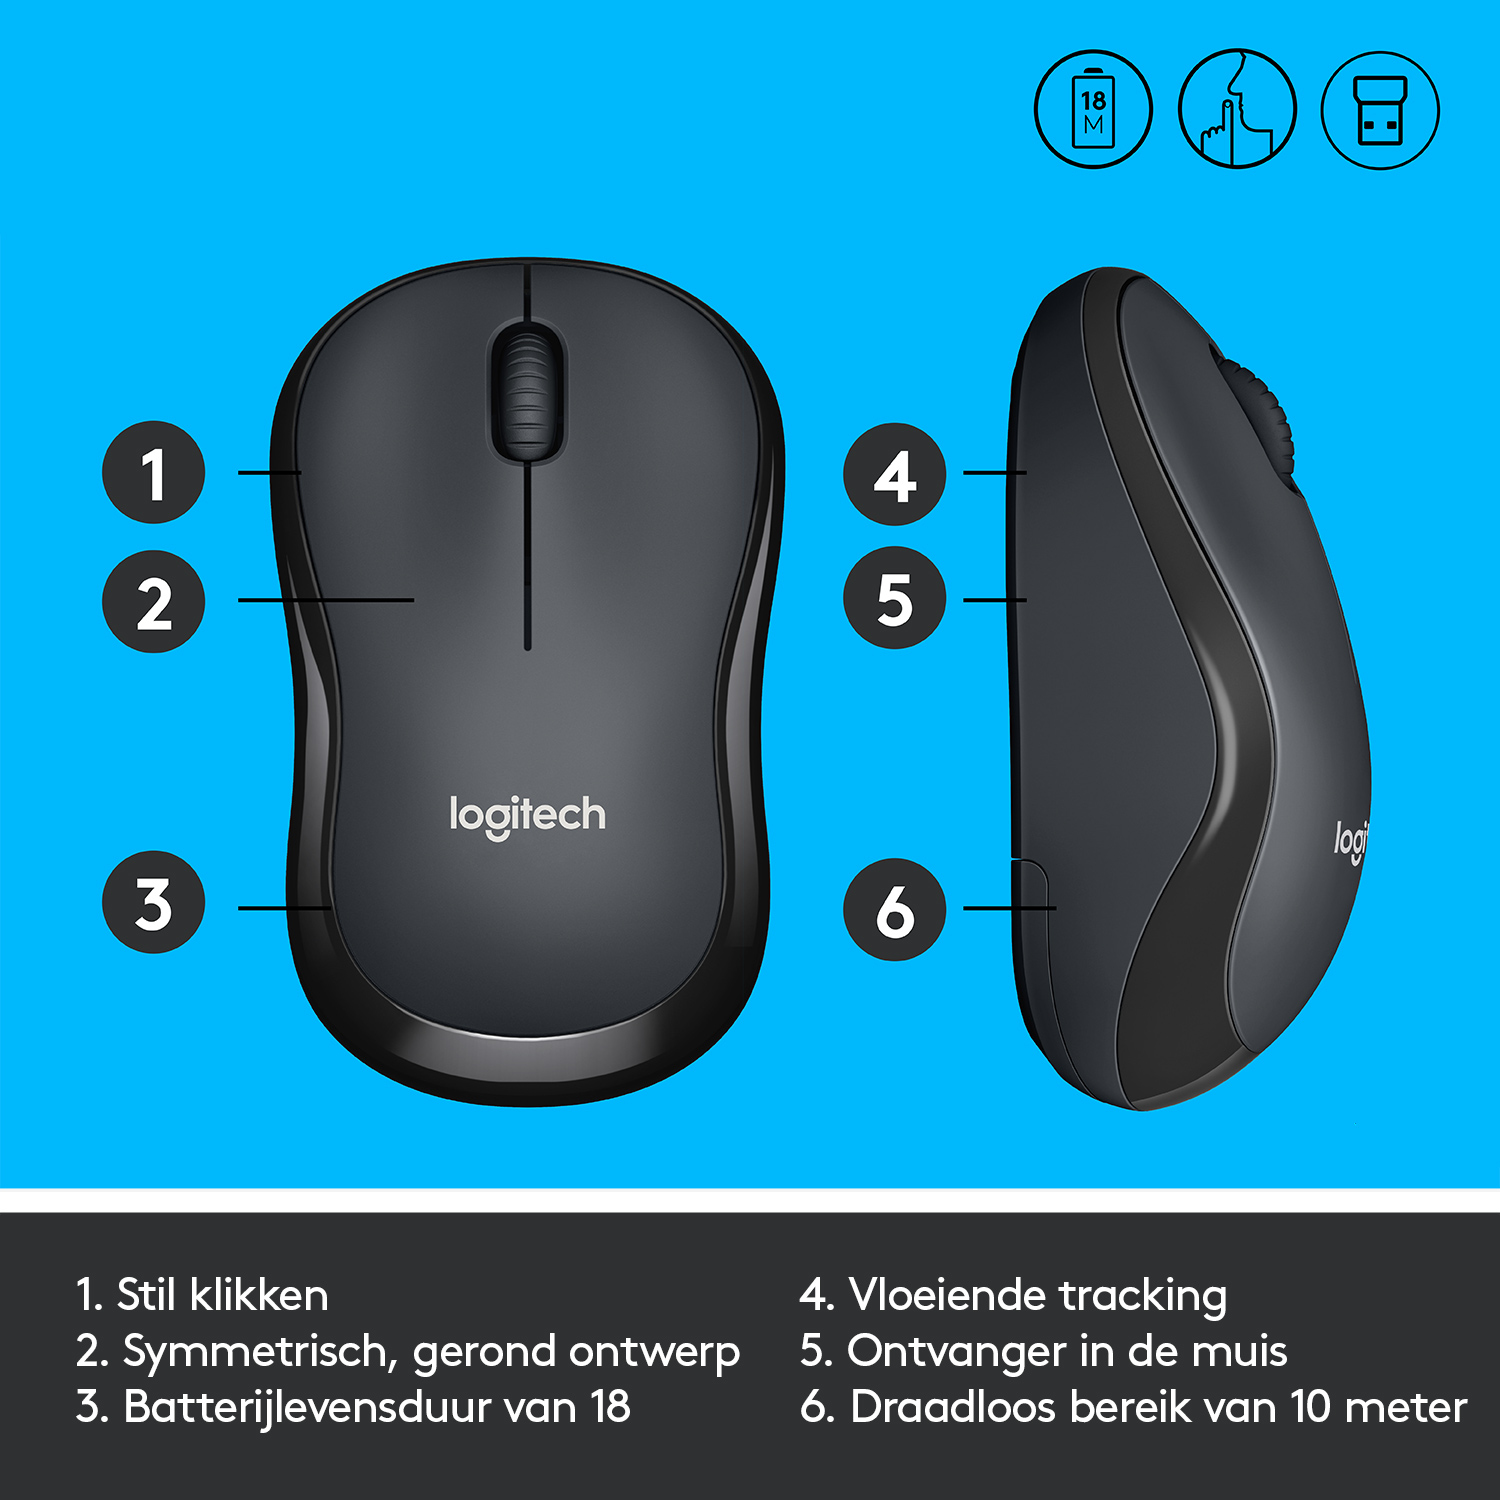 Logitech wireless mouse m220 black